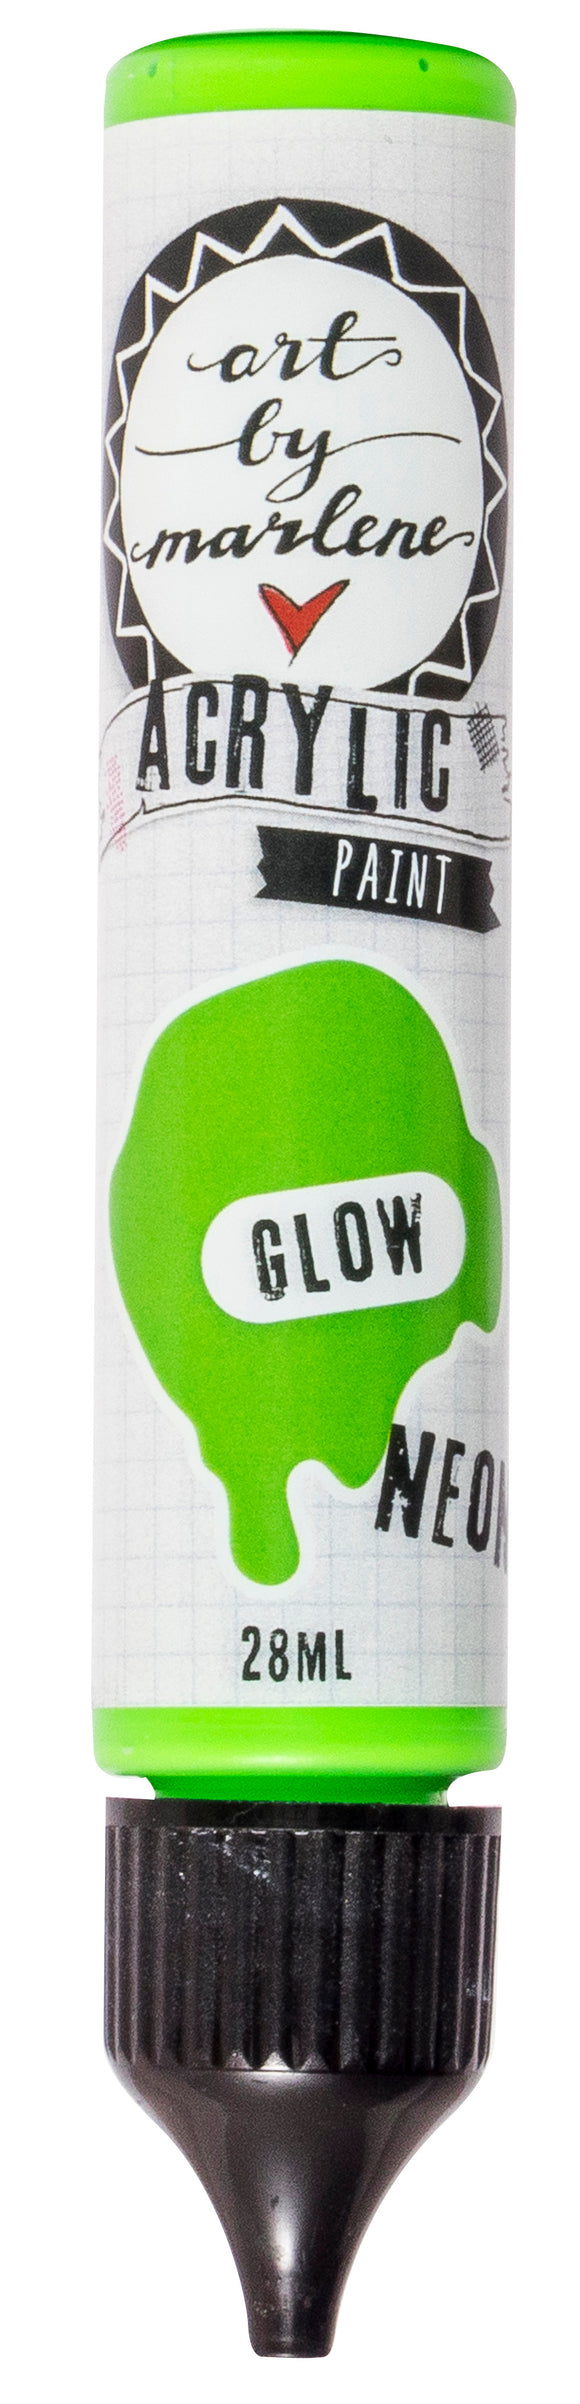 Acrylic Paint - Glow Neon : (ABM) ACP24